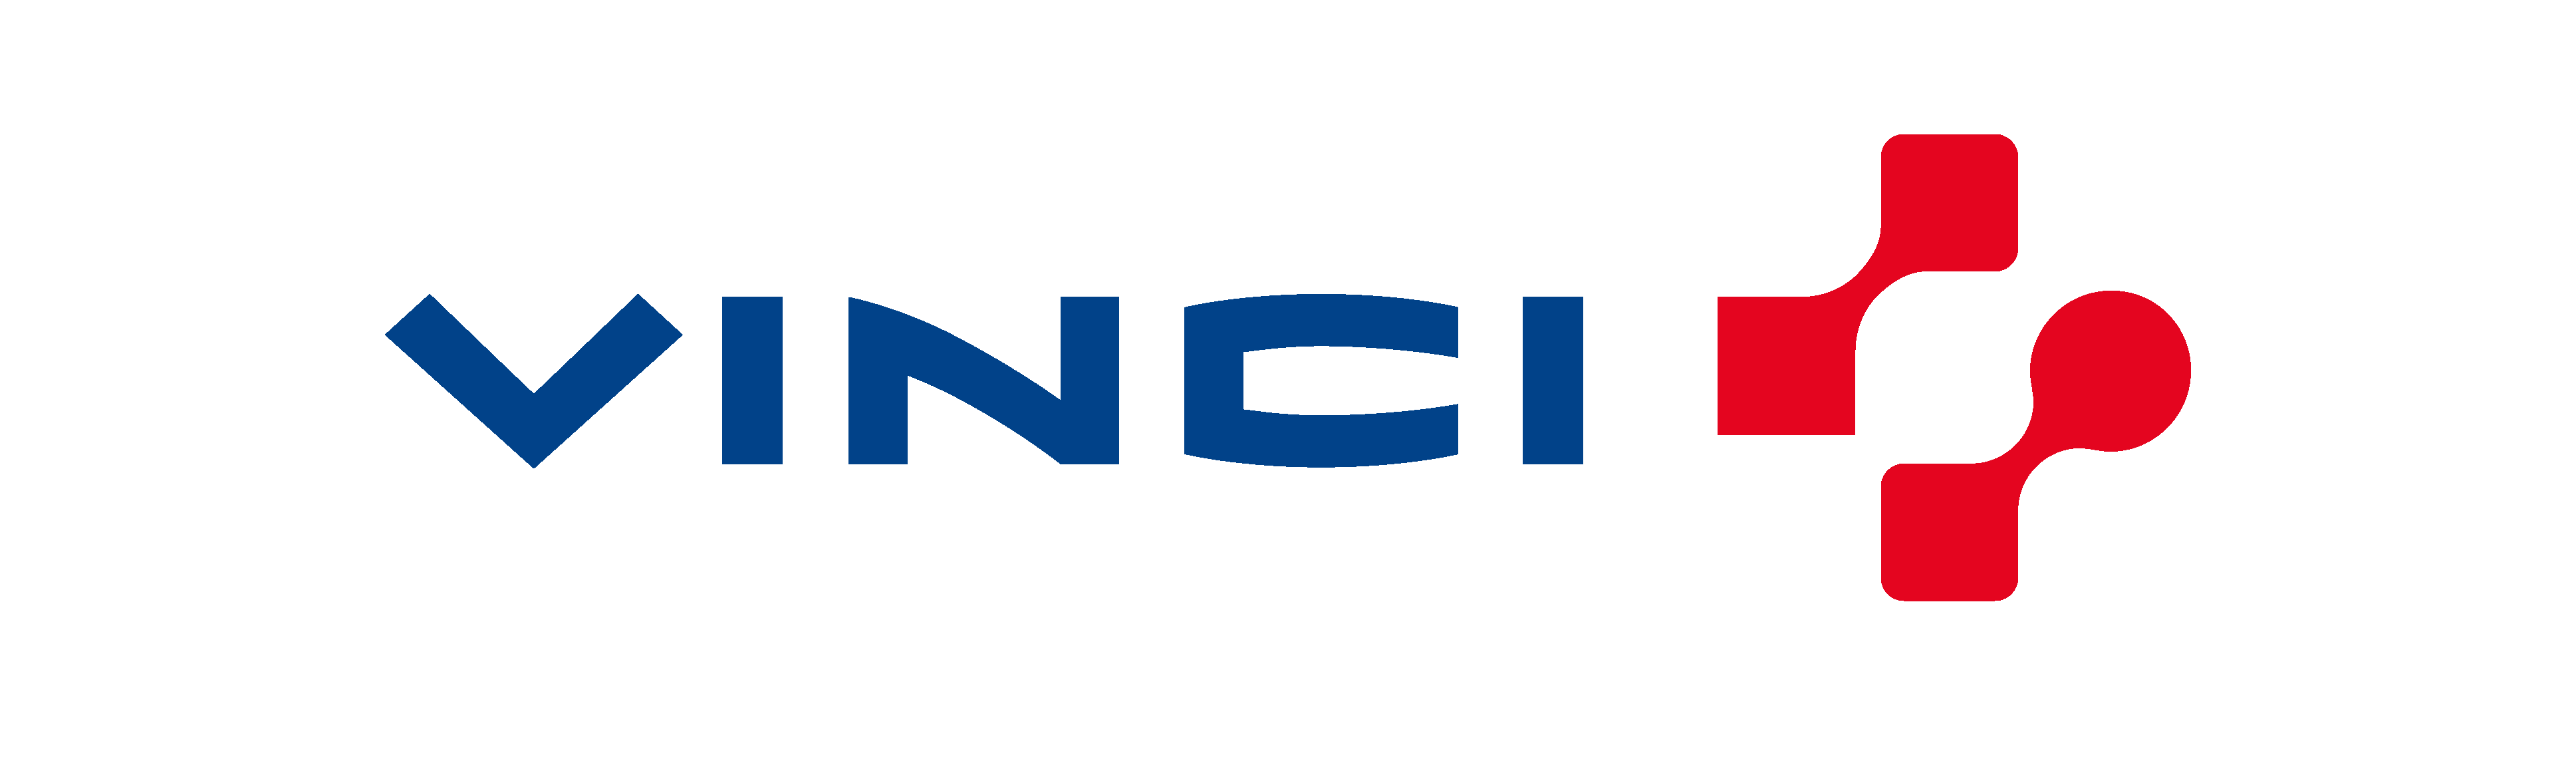 logo-VINCI-1-1